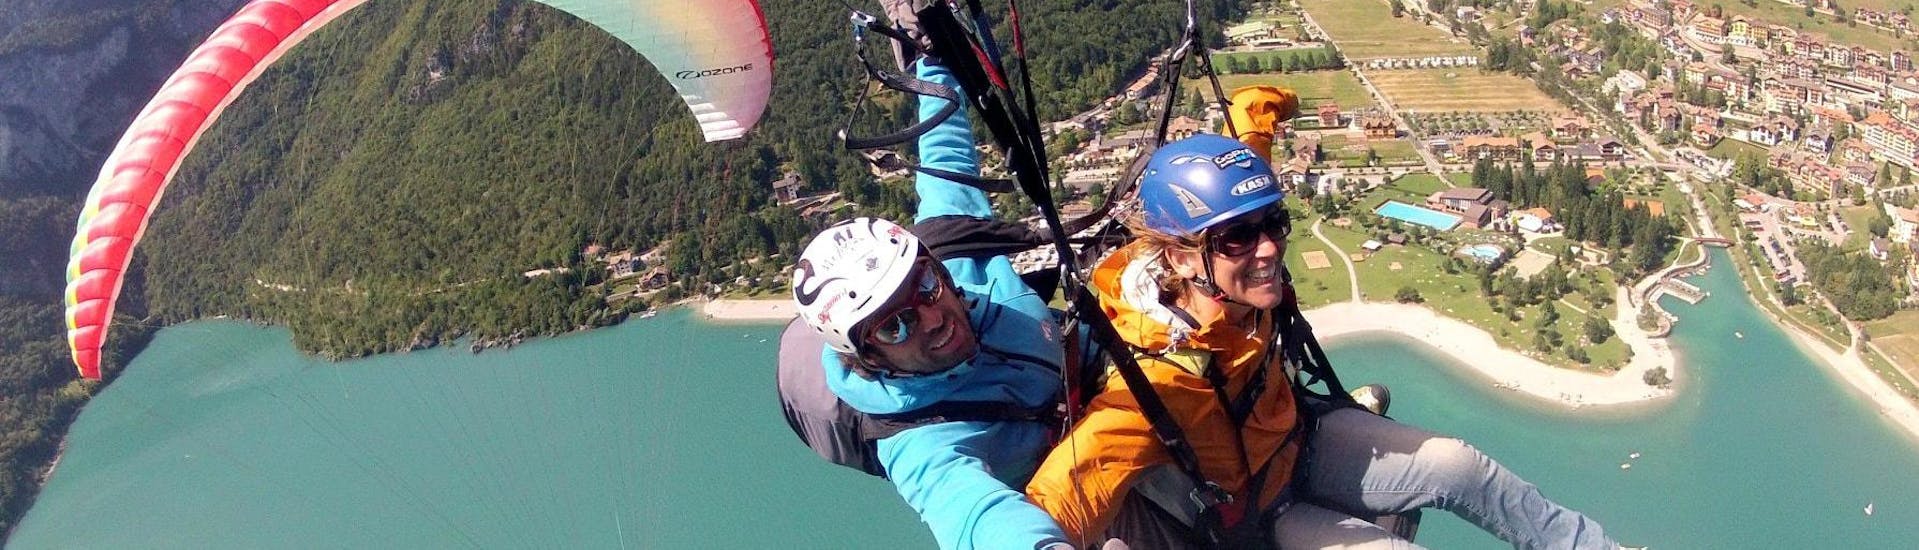 acrobatic-tandem-paragliding-in-molveno-ifly-tandem-hero